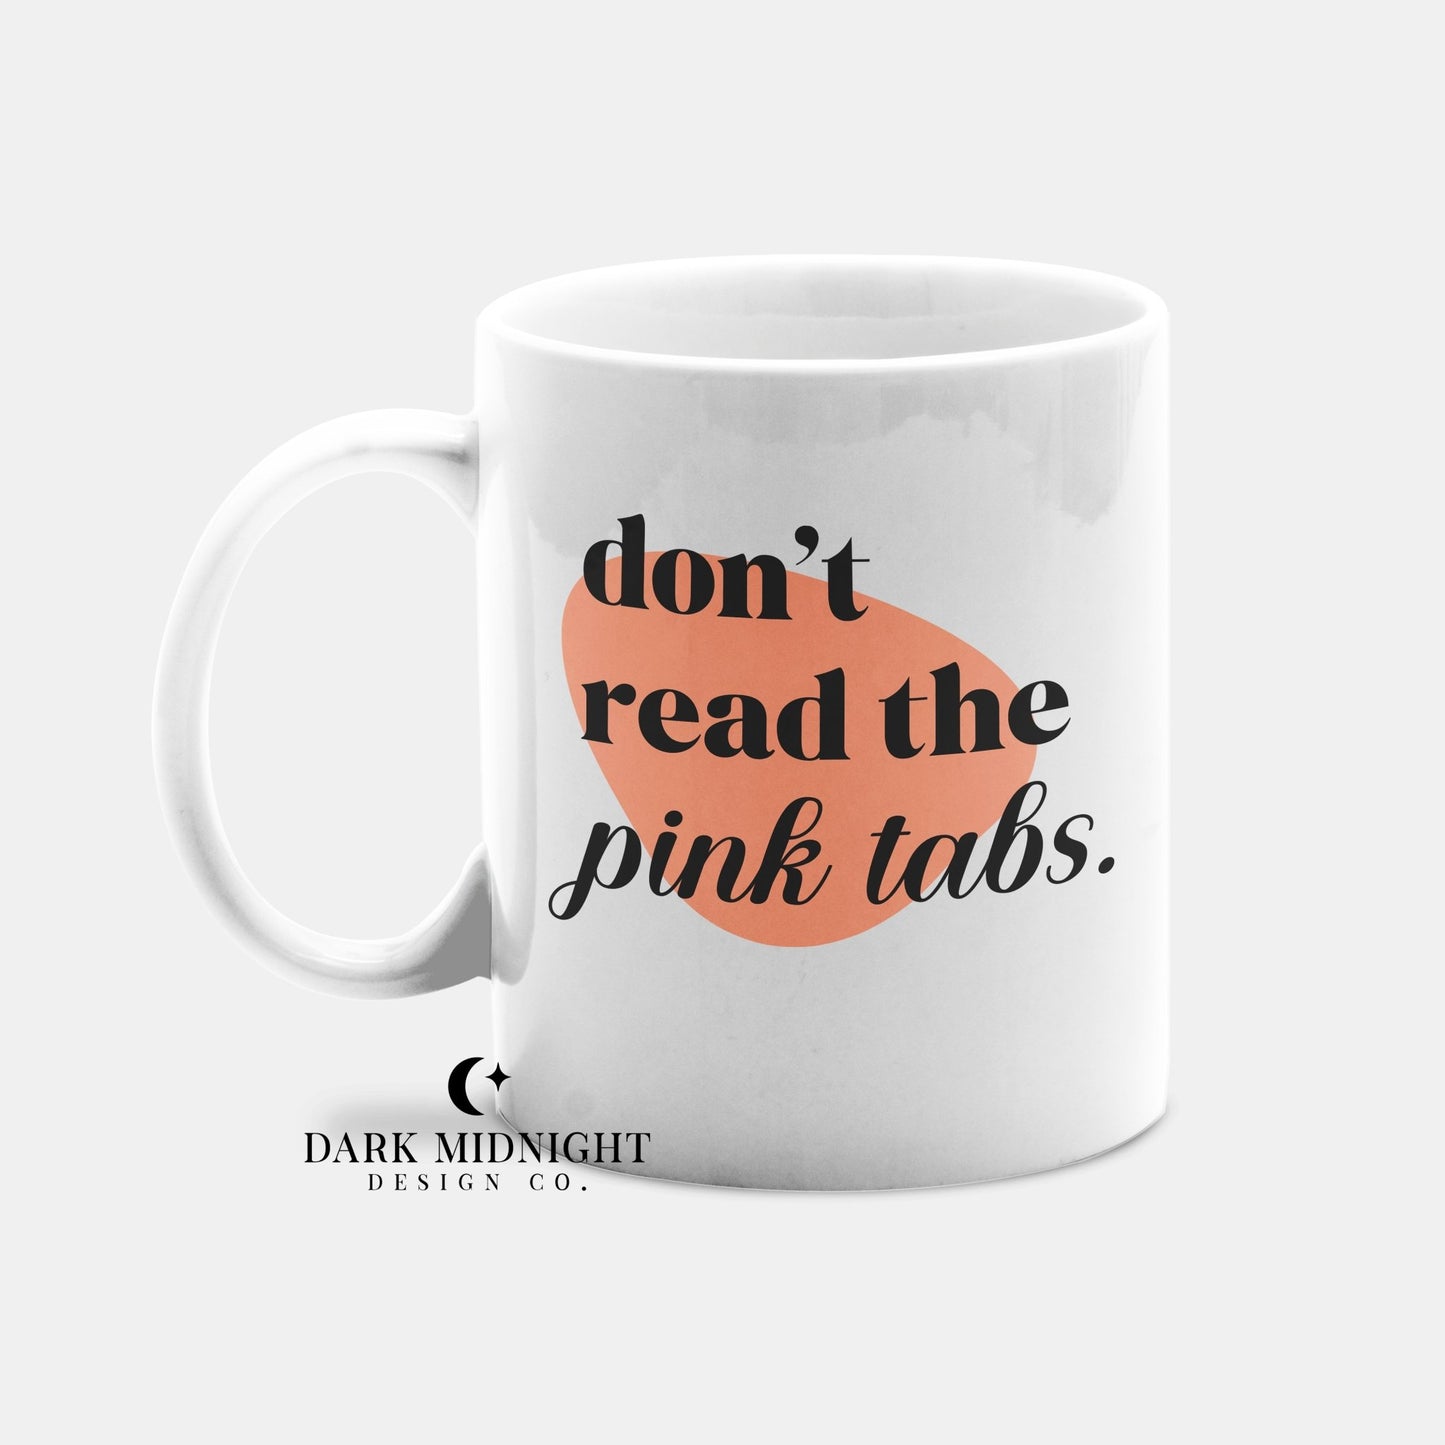 Don't Read The Pink Tabs 15 oz Mug - Dark Midnight Design Co